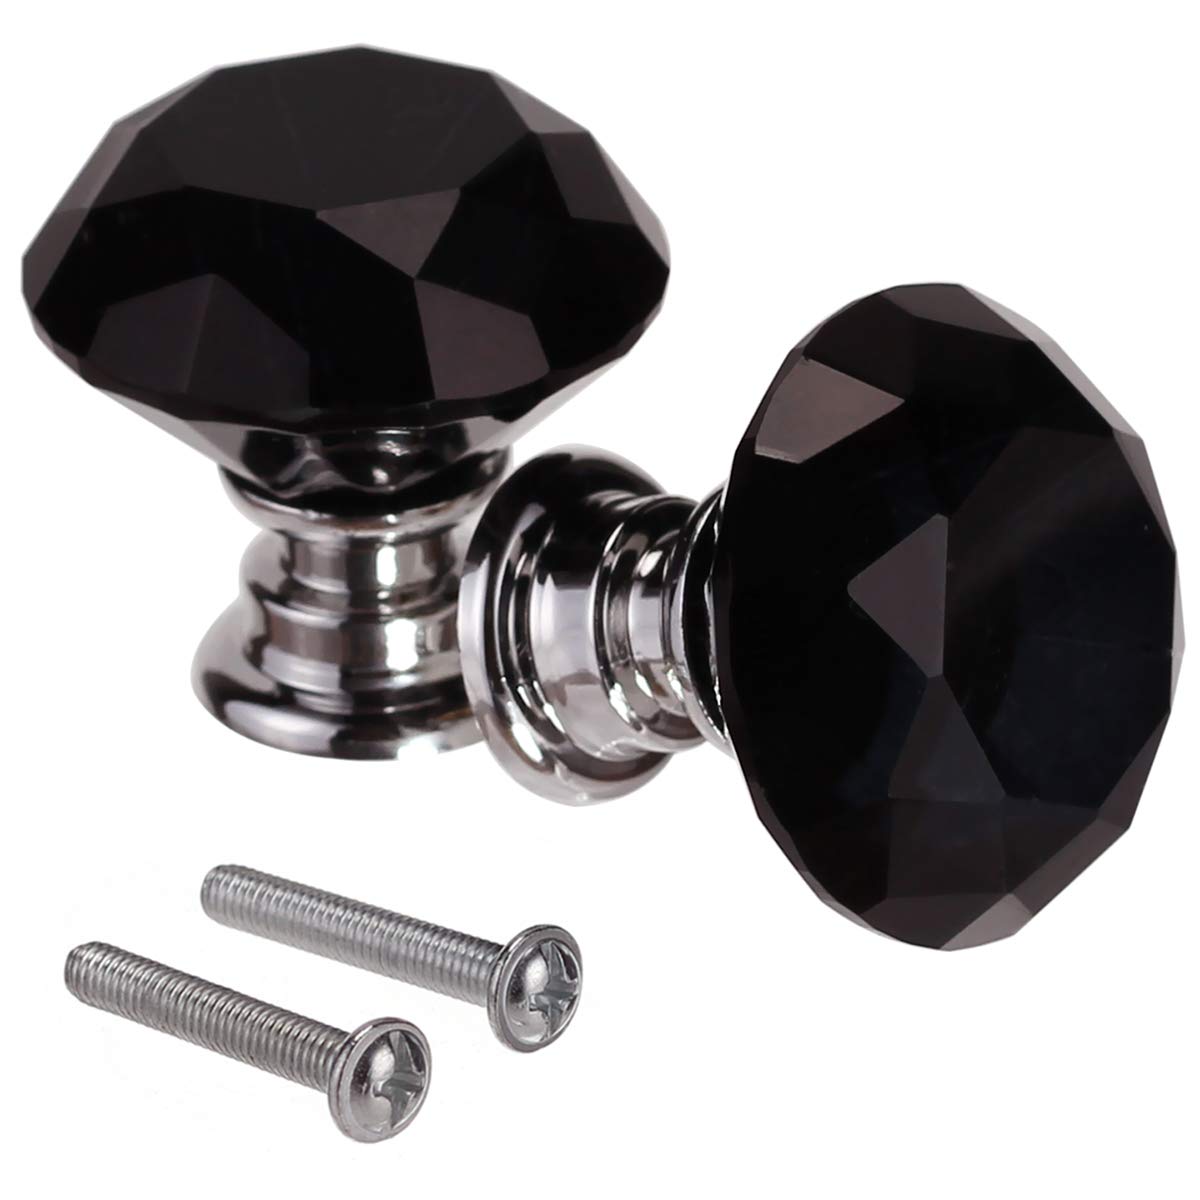 Mtsooning 12pcs 30mm Diamond Crystal Glass Knob for Closet Cabinet Drawer Kitchen Dresser Cupboard Wardrobe,3 Size Screws,Red